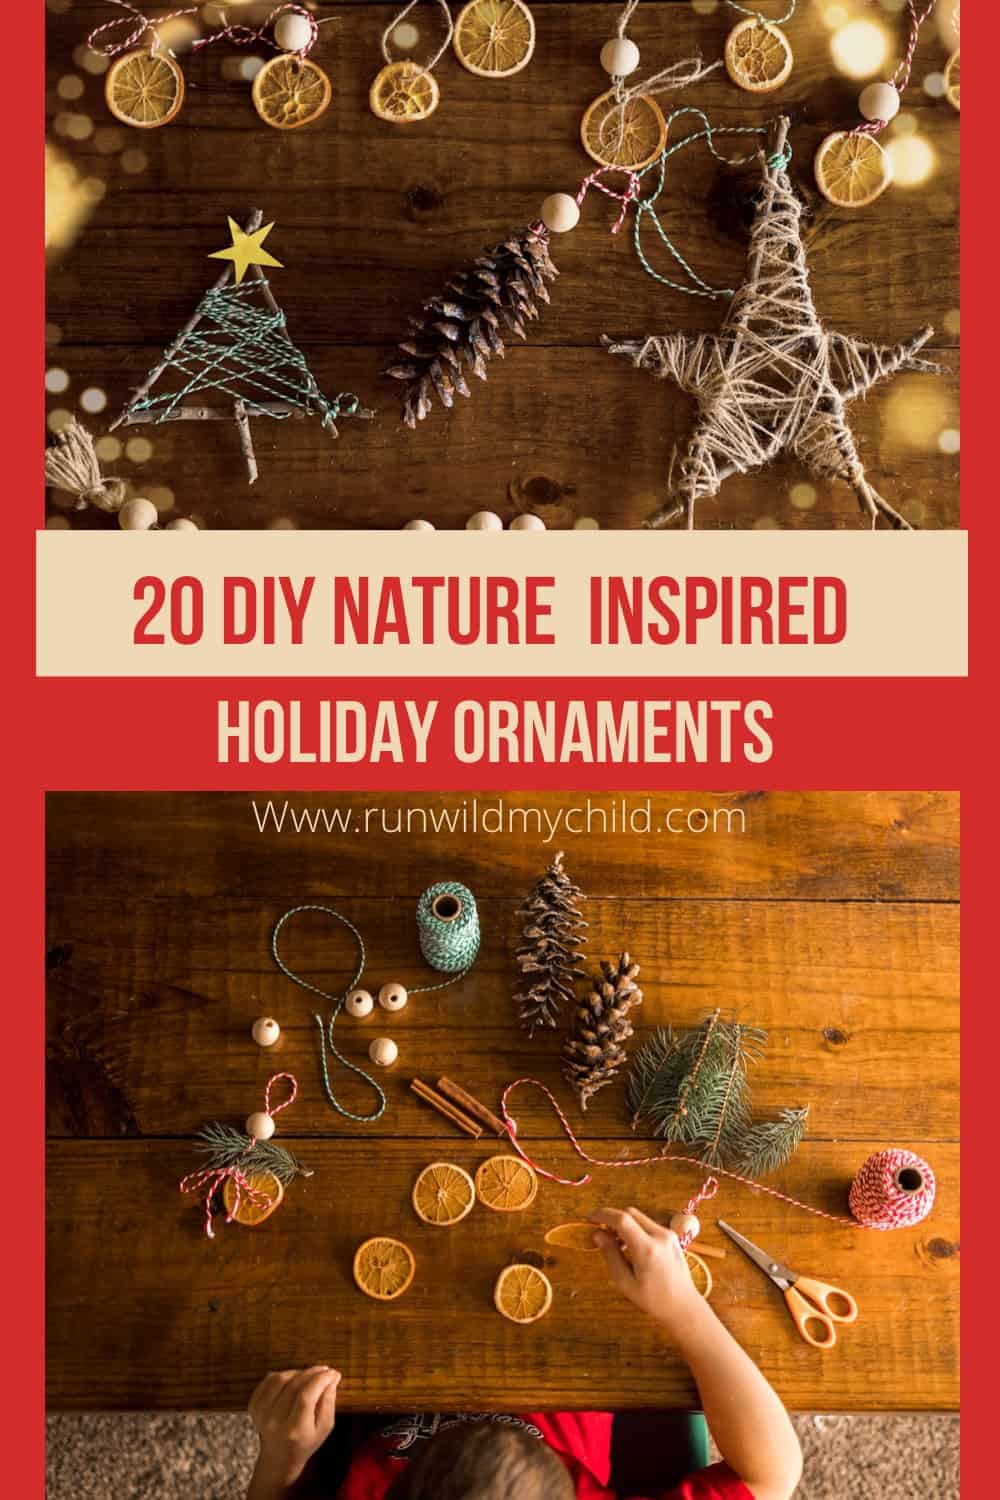 https://runwildmychild.com/wp-content/uploads/2021/12/20-DIY-Nature-inspired-holiday-ornaments-.jpg